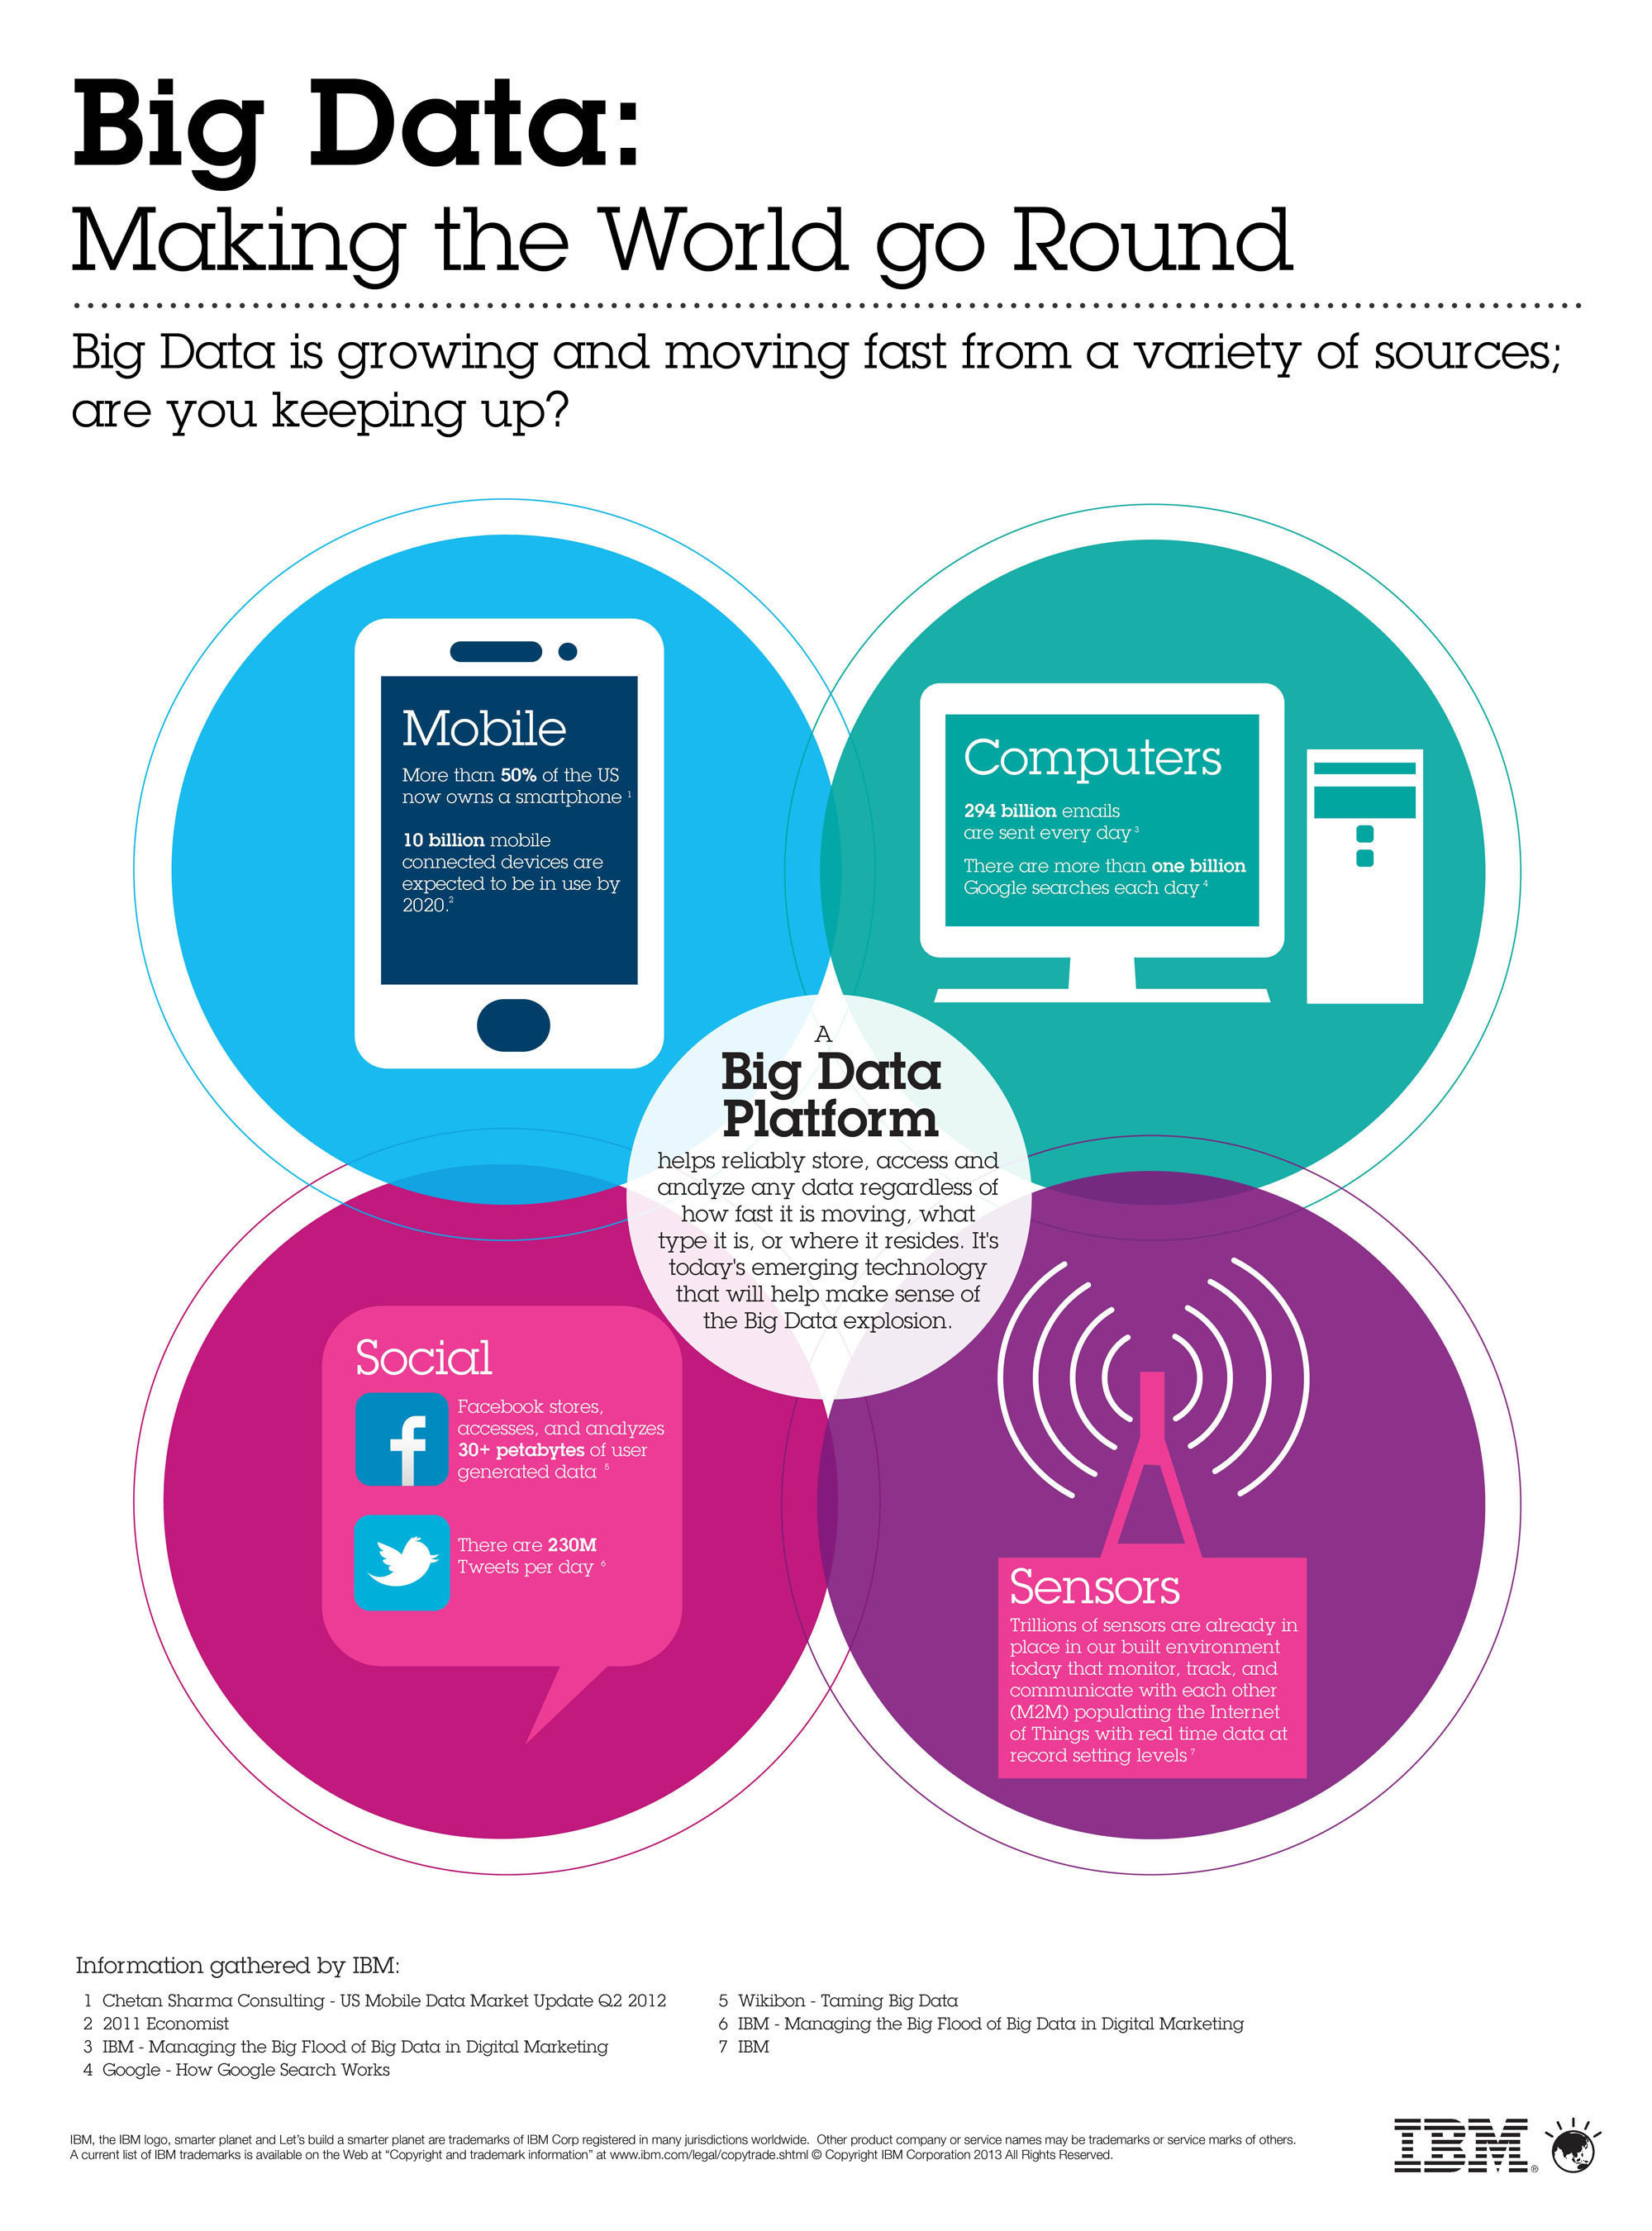 Big Data: Making the World Go Round. (PRNewsFoto/IBM) (PRNewsFoto/IBM)